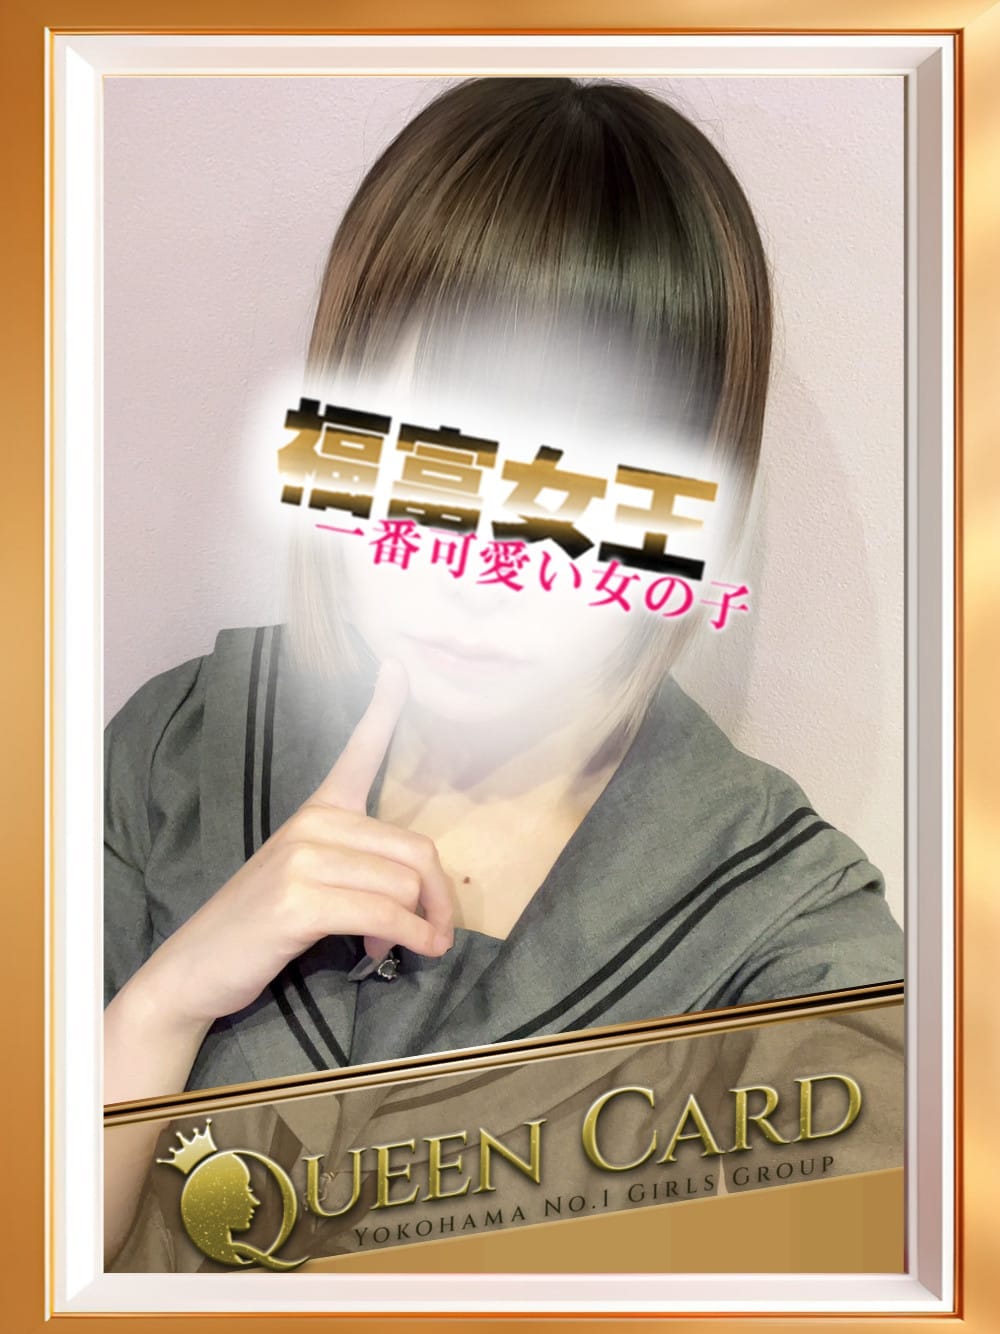 NO.71 ピアノ(Queen Card)のプロフ写真2枚目